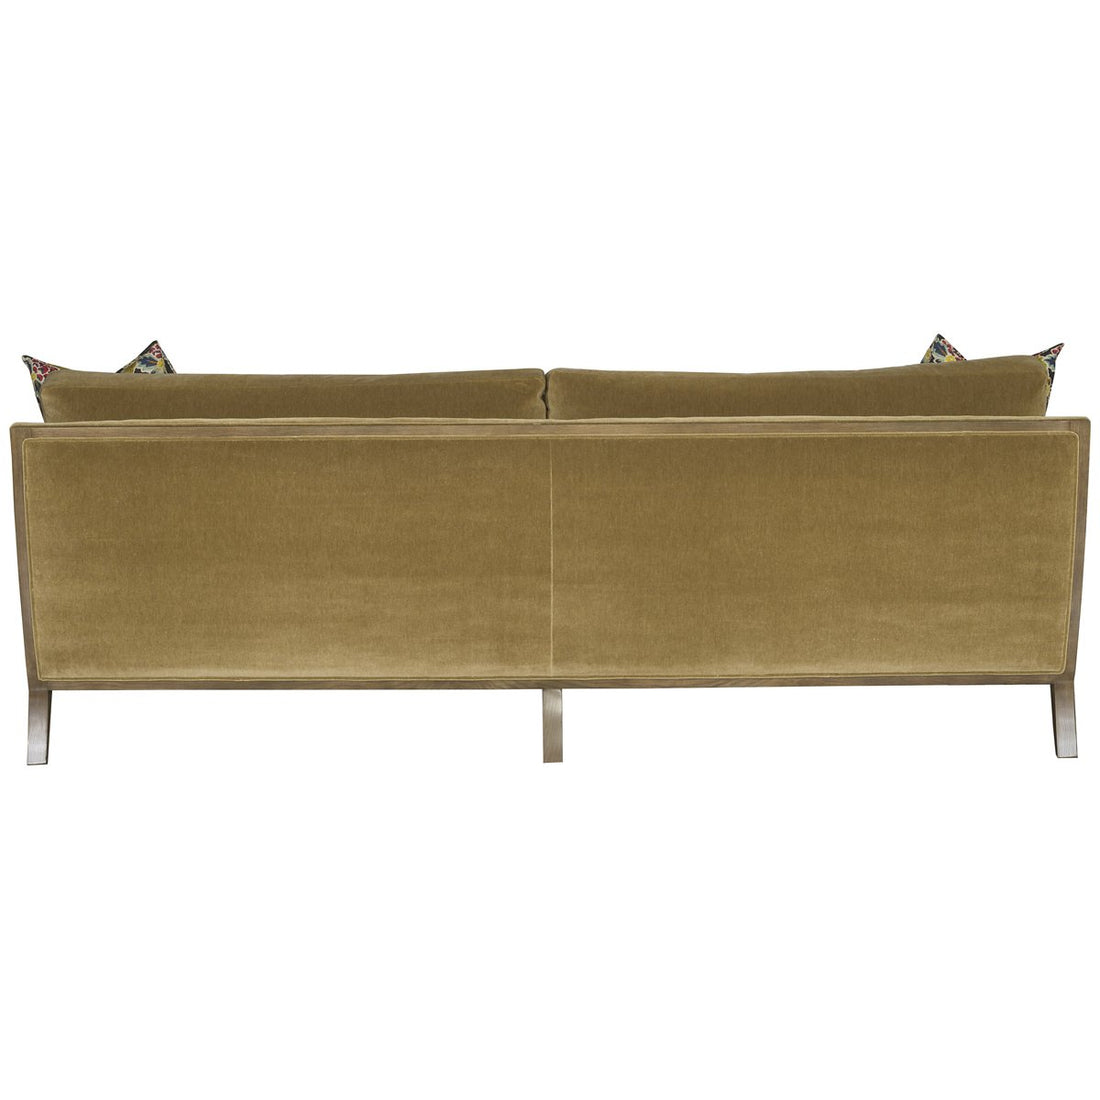 Vanguard Furniture Knole Sofa